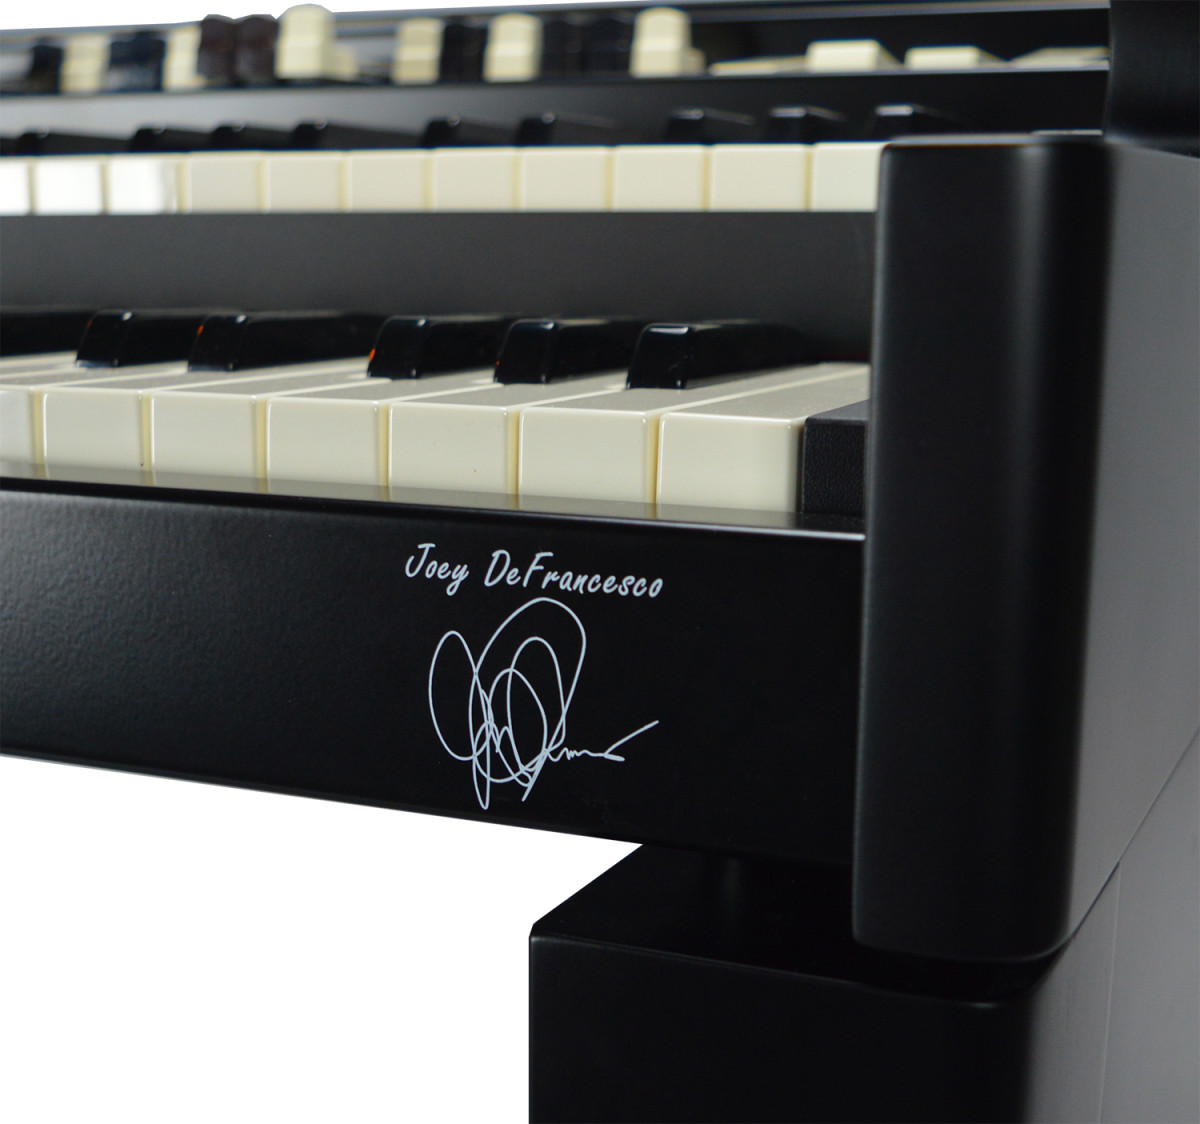 Viscount Legend Black Jdf Signature - Organos portatil - Variation 2